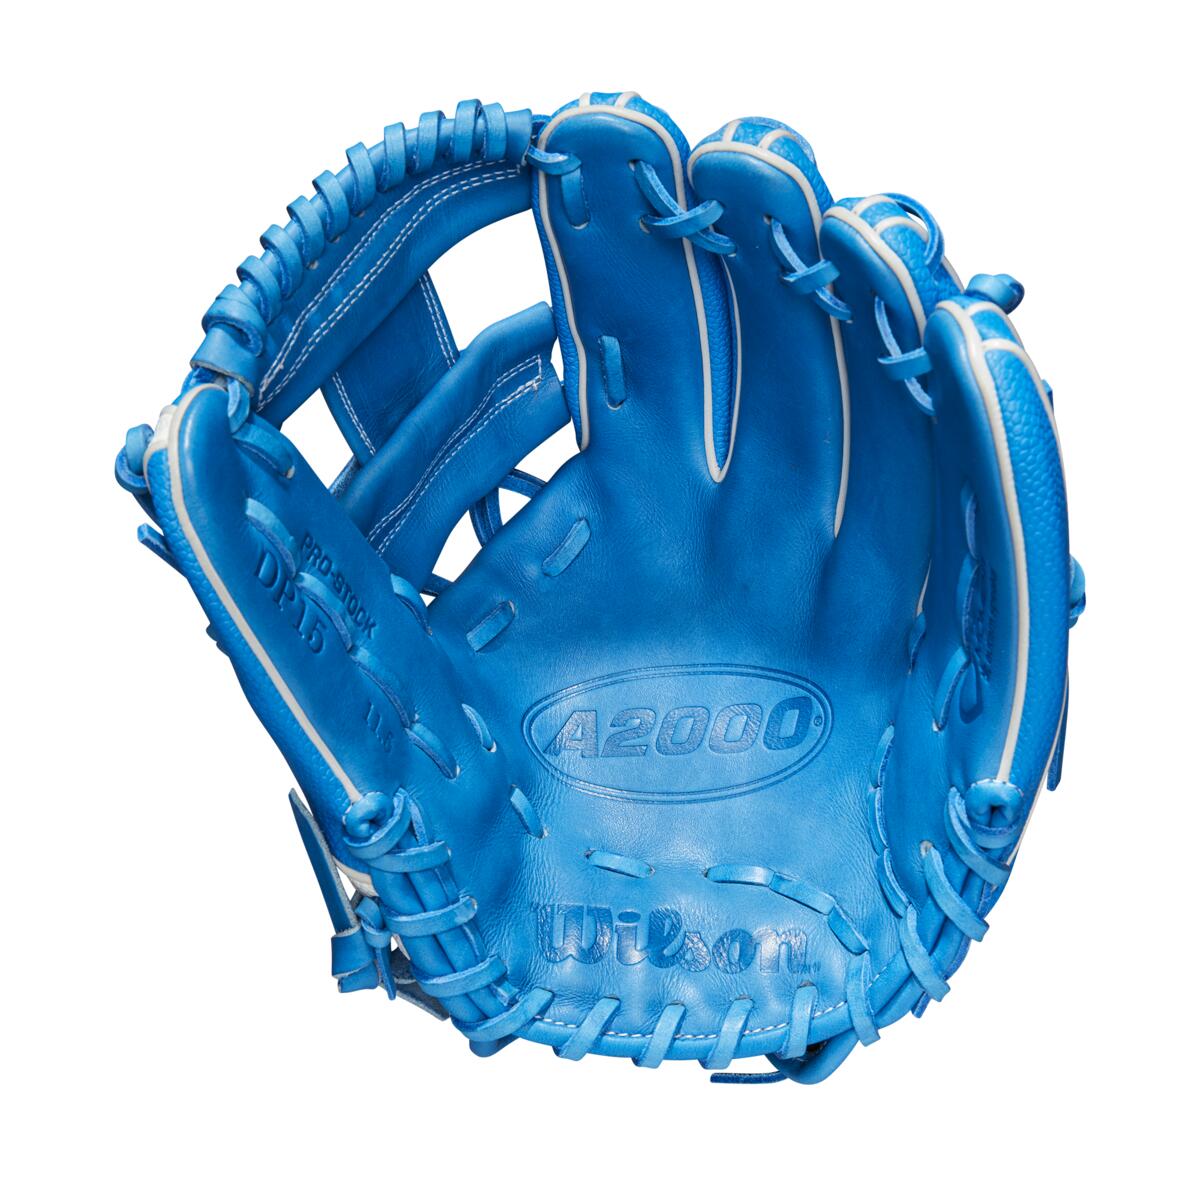 Wilson A2000 Ice DP15 11.5 Baseball Glove: WBW100795115